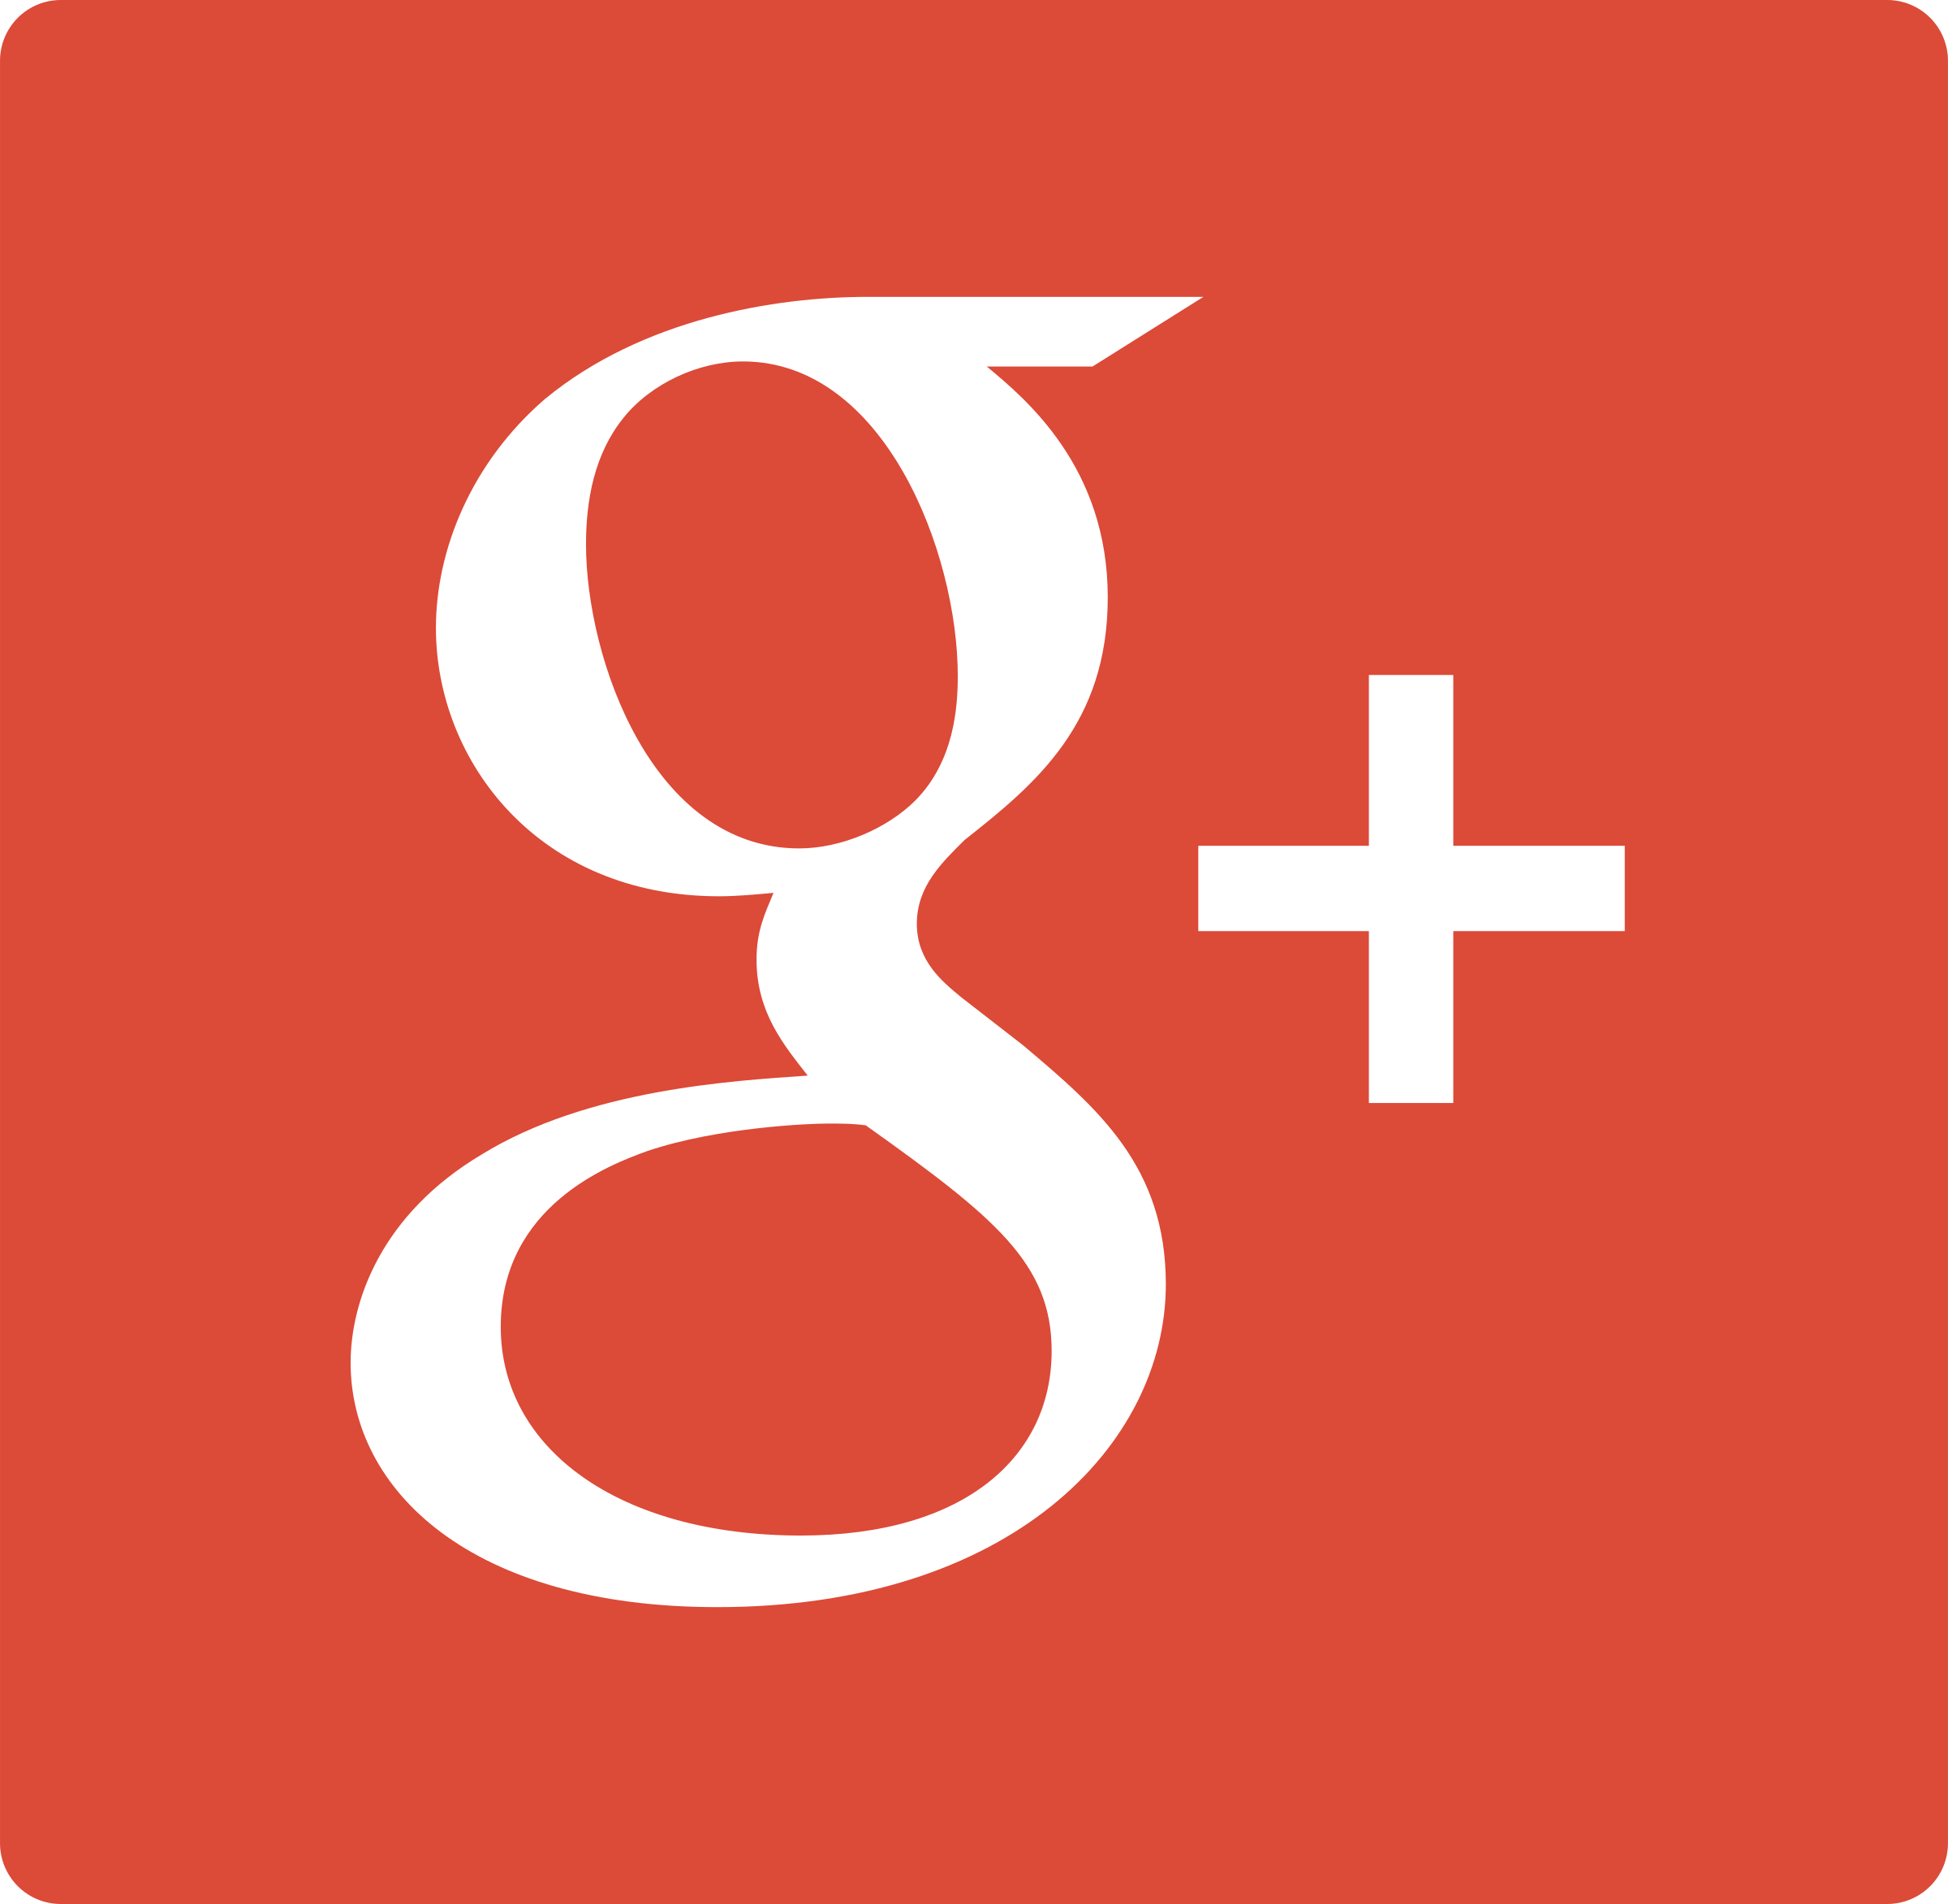 Latest Google Plus Logo - Google plus Logo PNG Transparent & SVG Vector - Freebie Supply